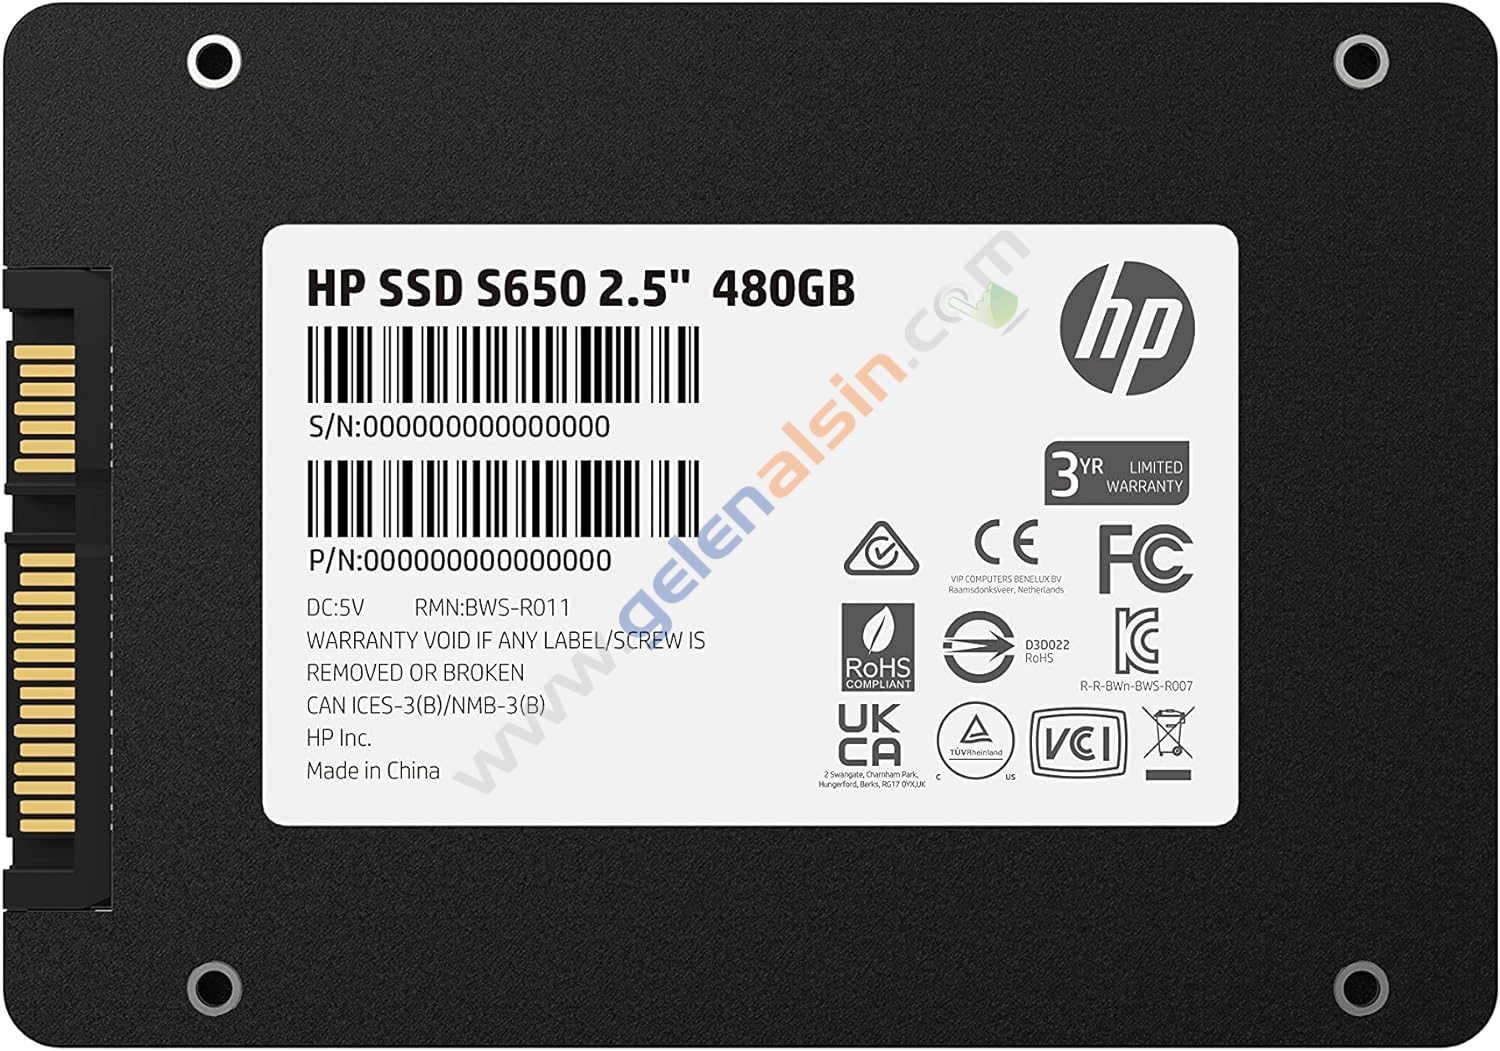 HP S650 345M9AA 480GB 560/490MB/s 2.5” SATA 3 SSD Harddisk